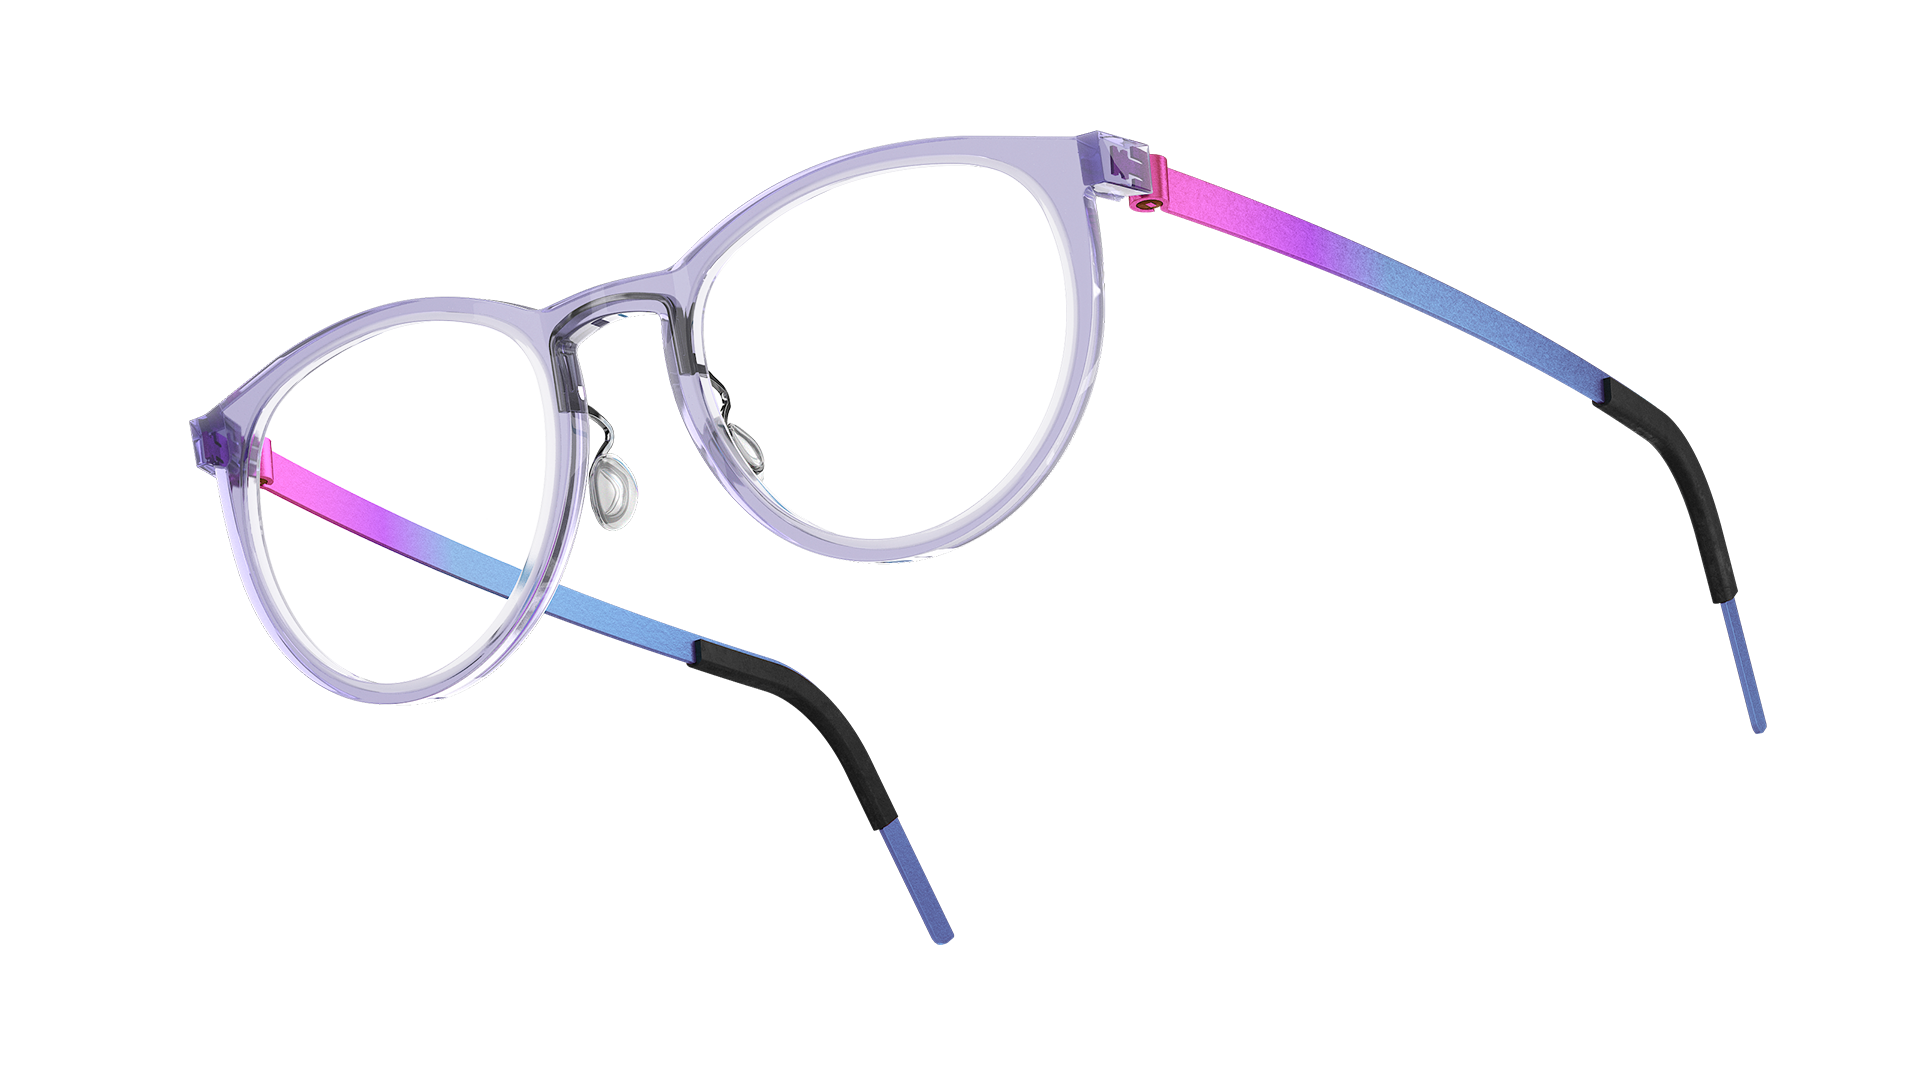 LINDBERG acetanium kid/teen, Modell 1505, Kinderbrille in Acetat mit Titanbügeln in Lila und Blau